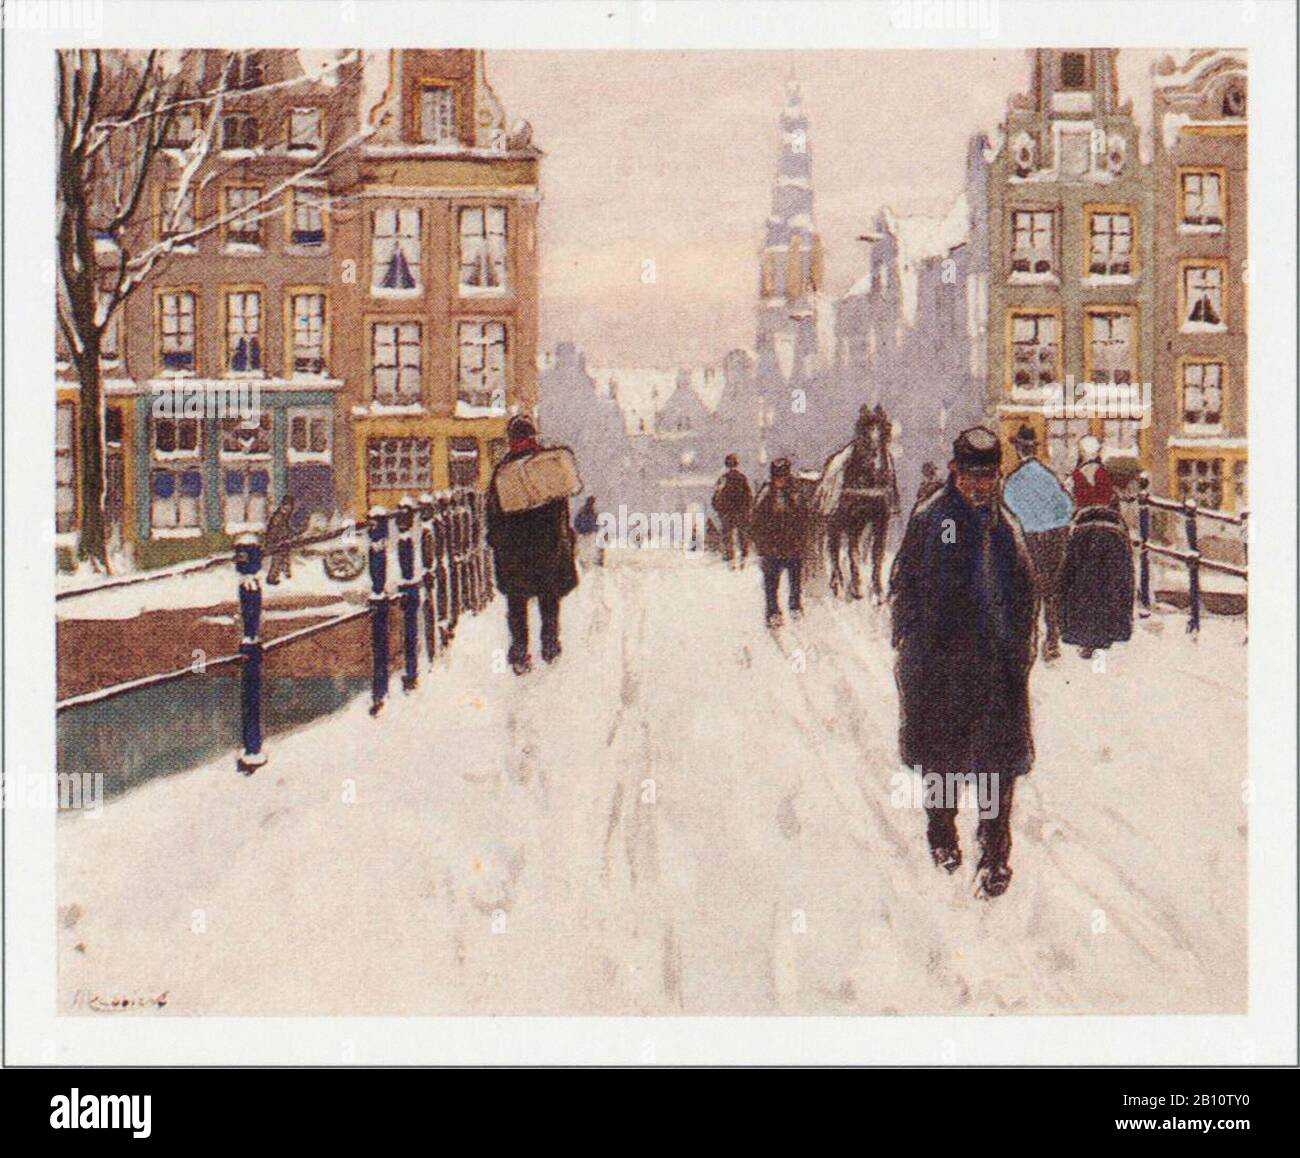 Amsterdam raadhuisstraat - Illustration by Henri Cassiers (1858 - 1944) Stock Photo